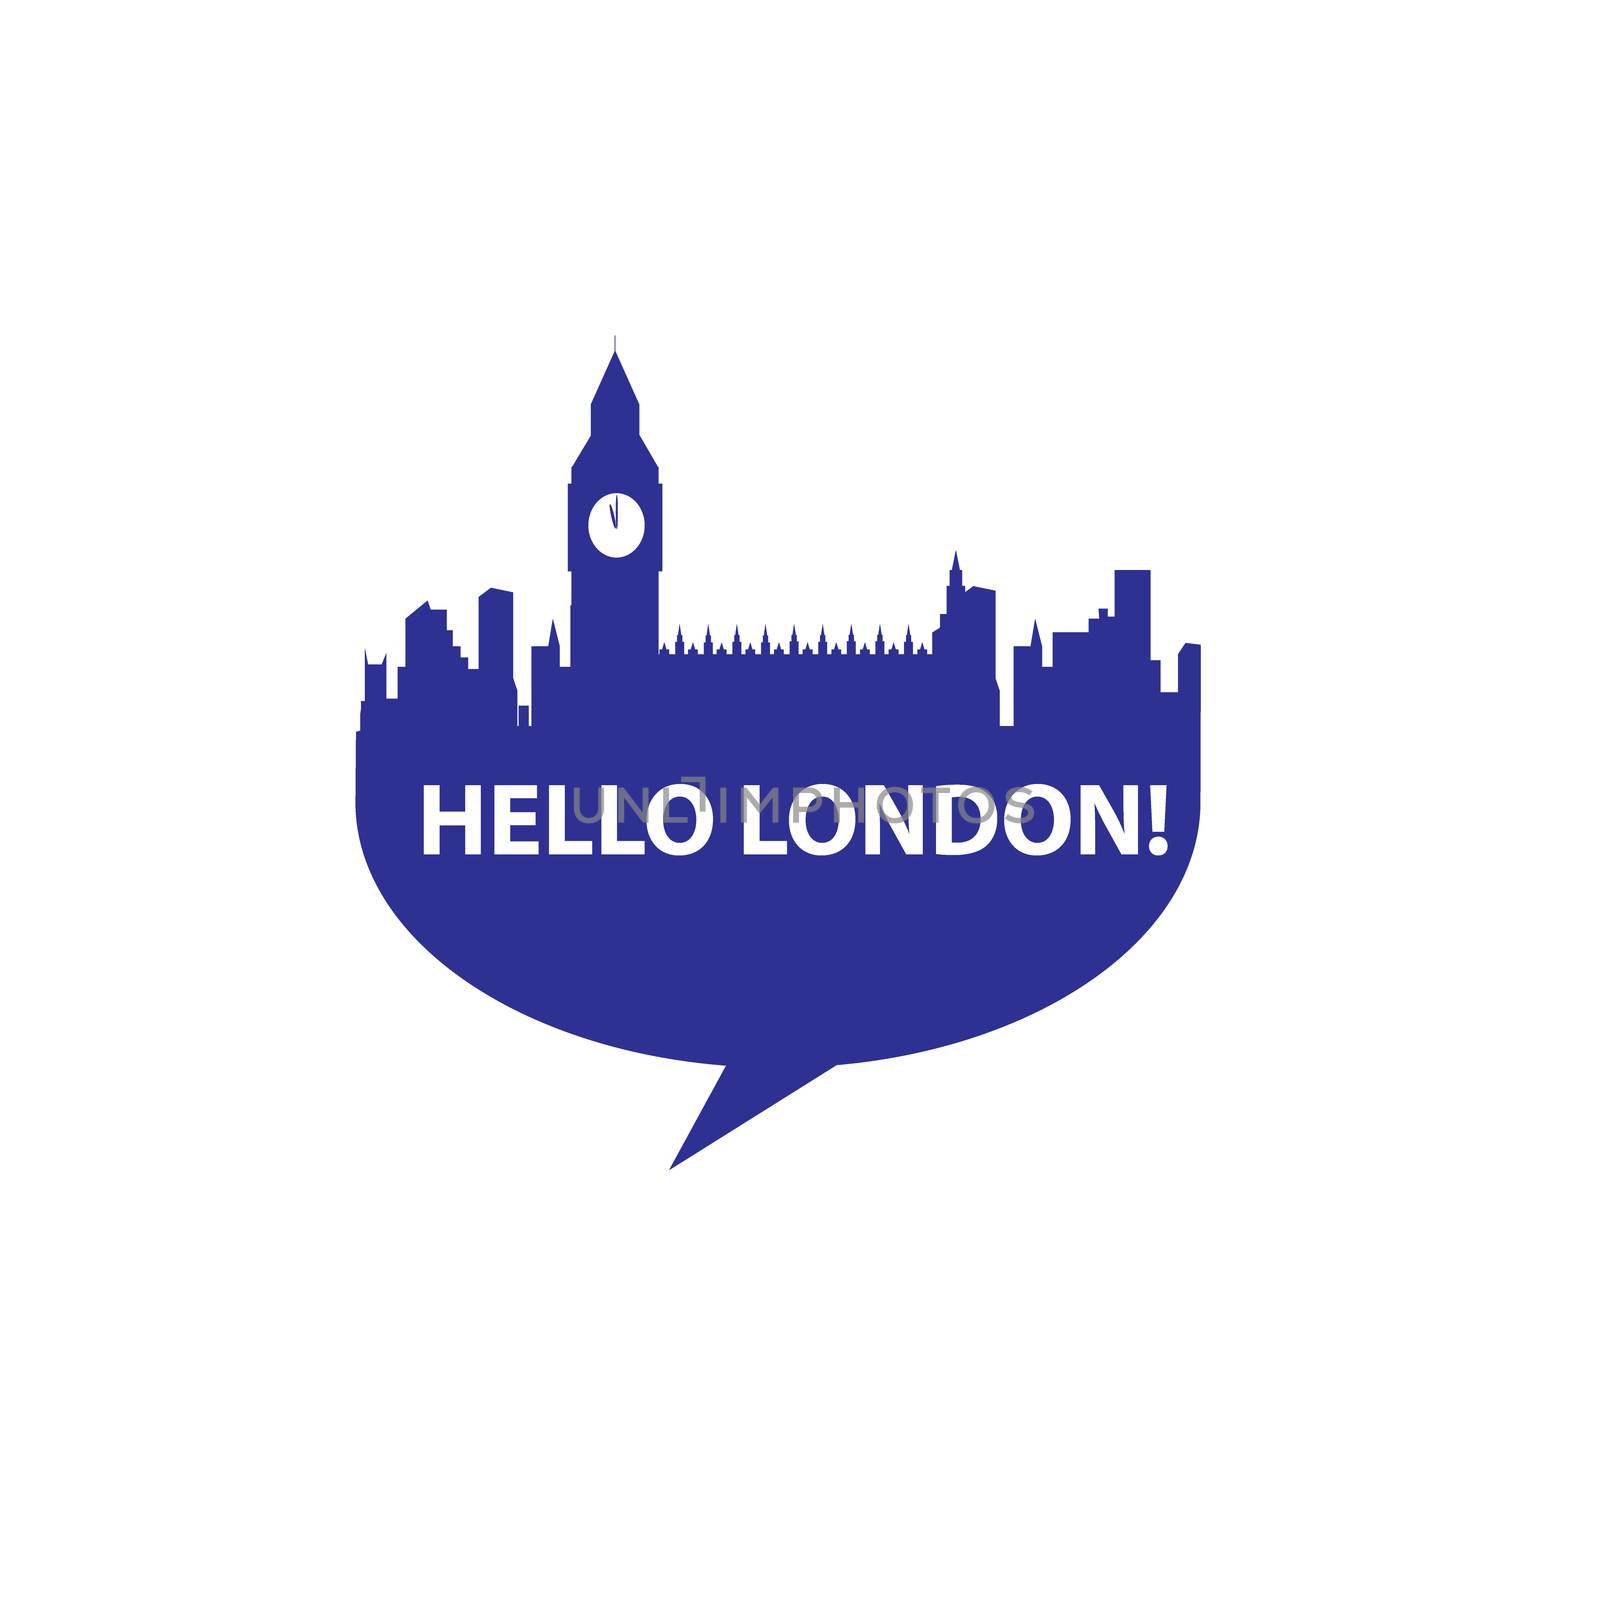 hello-london by antoshkaforever